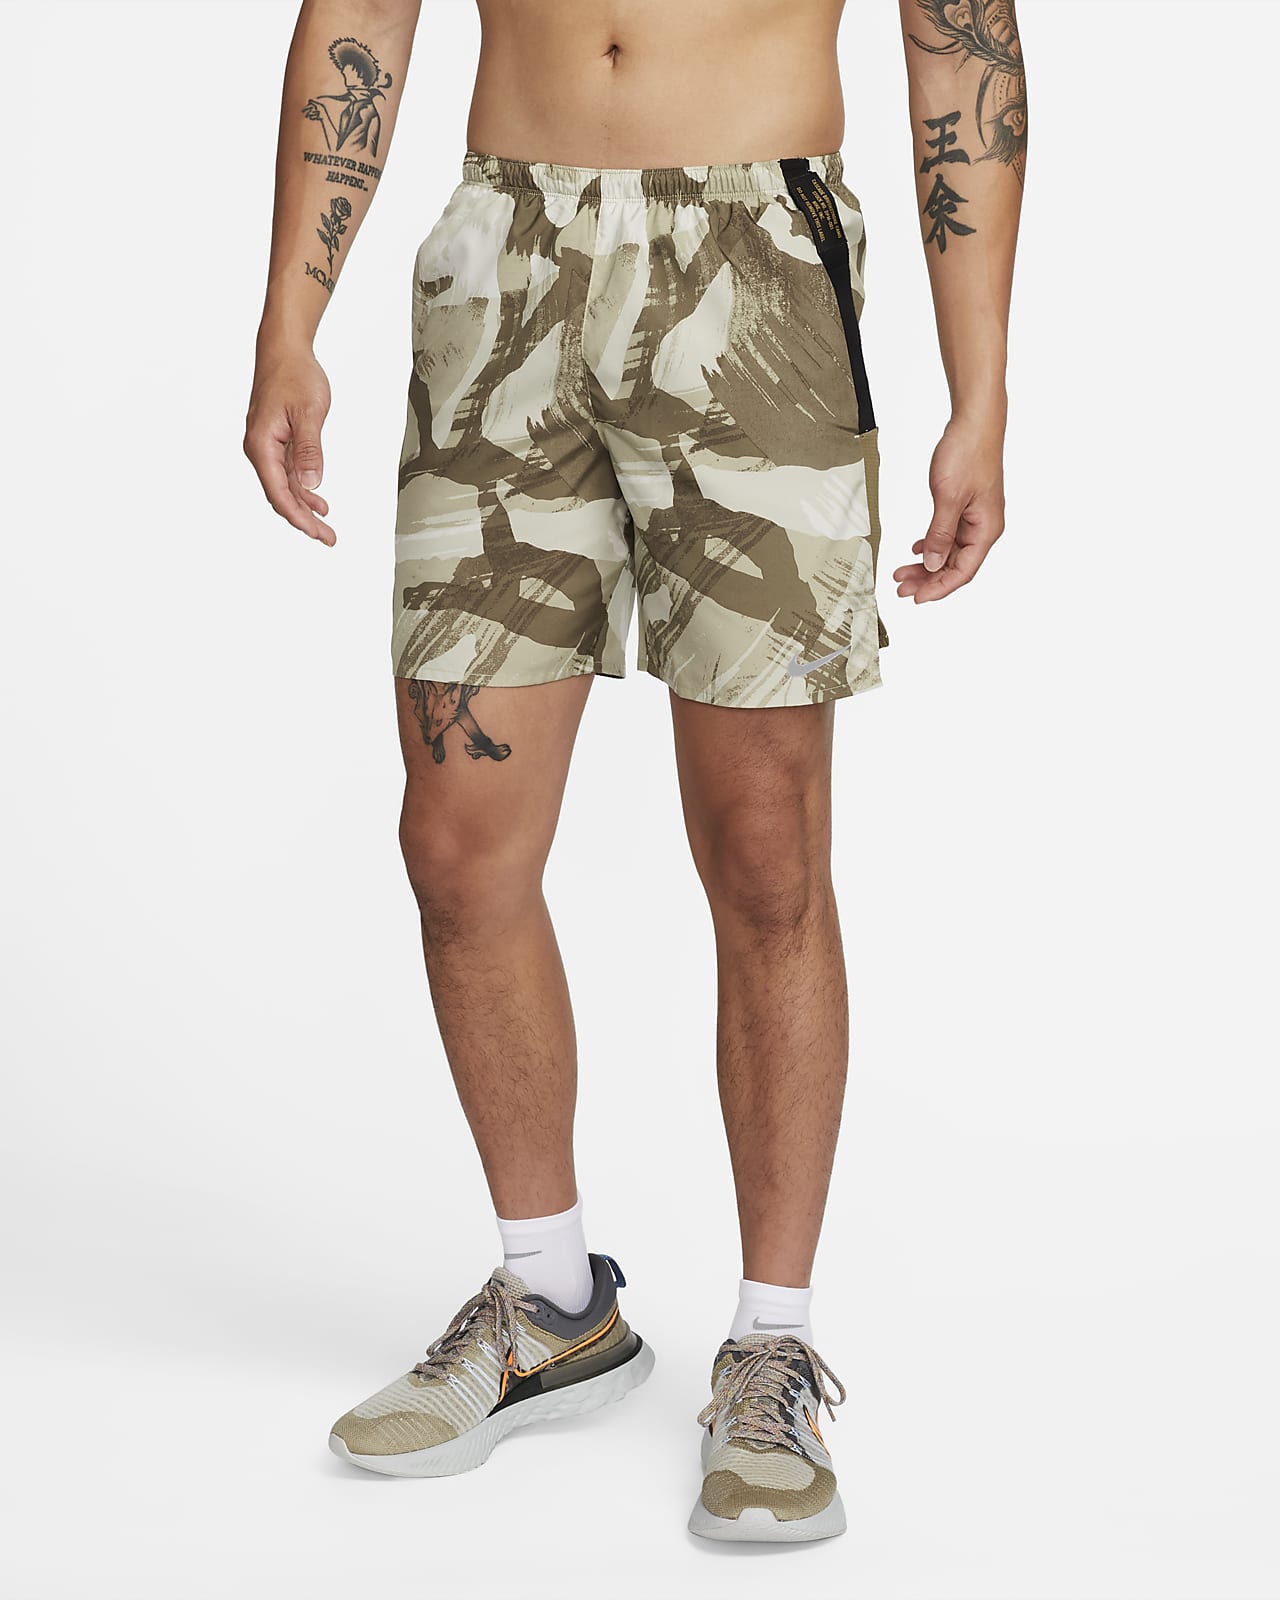 Shorts de running camuflajeados forrados de cm hombre Nike Challenger. Nike.com